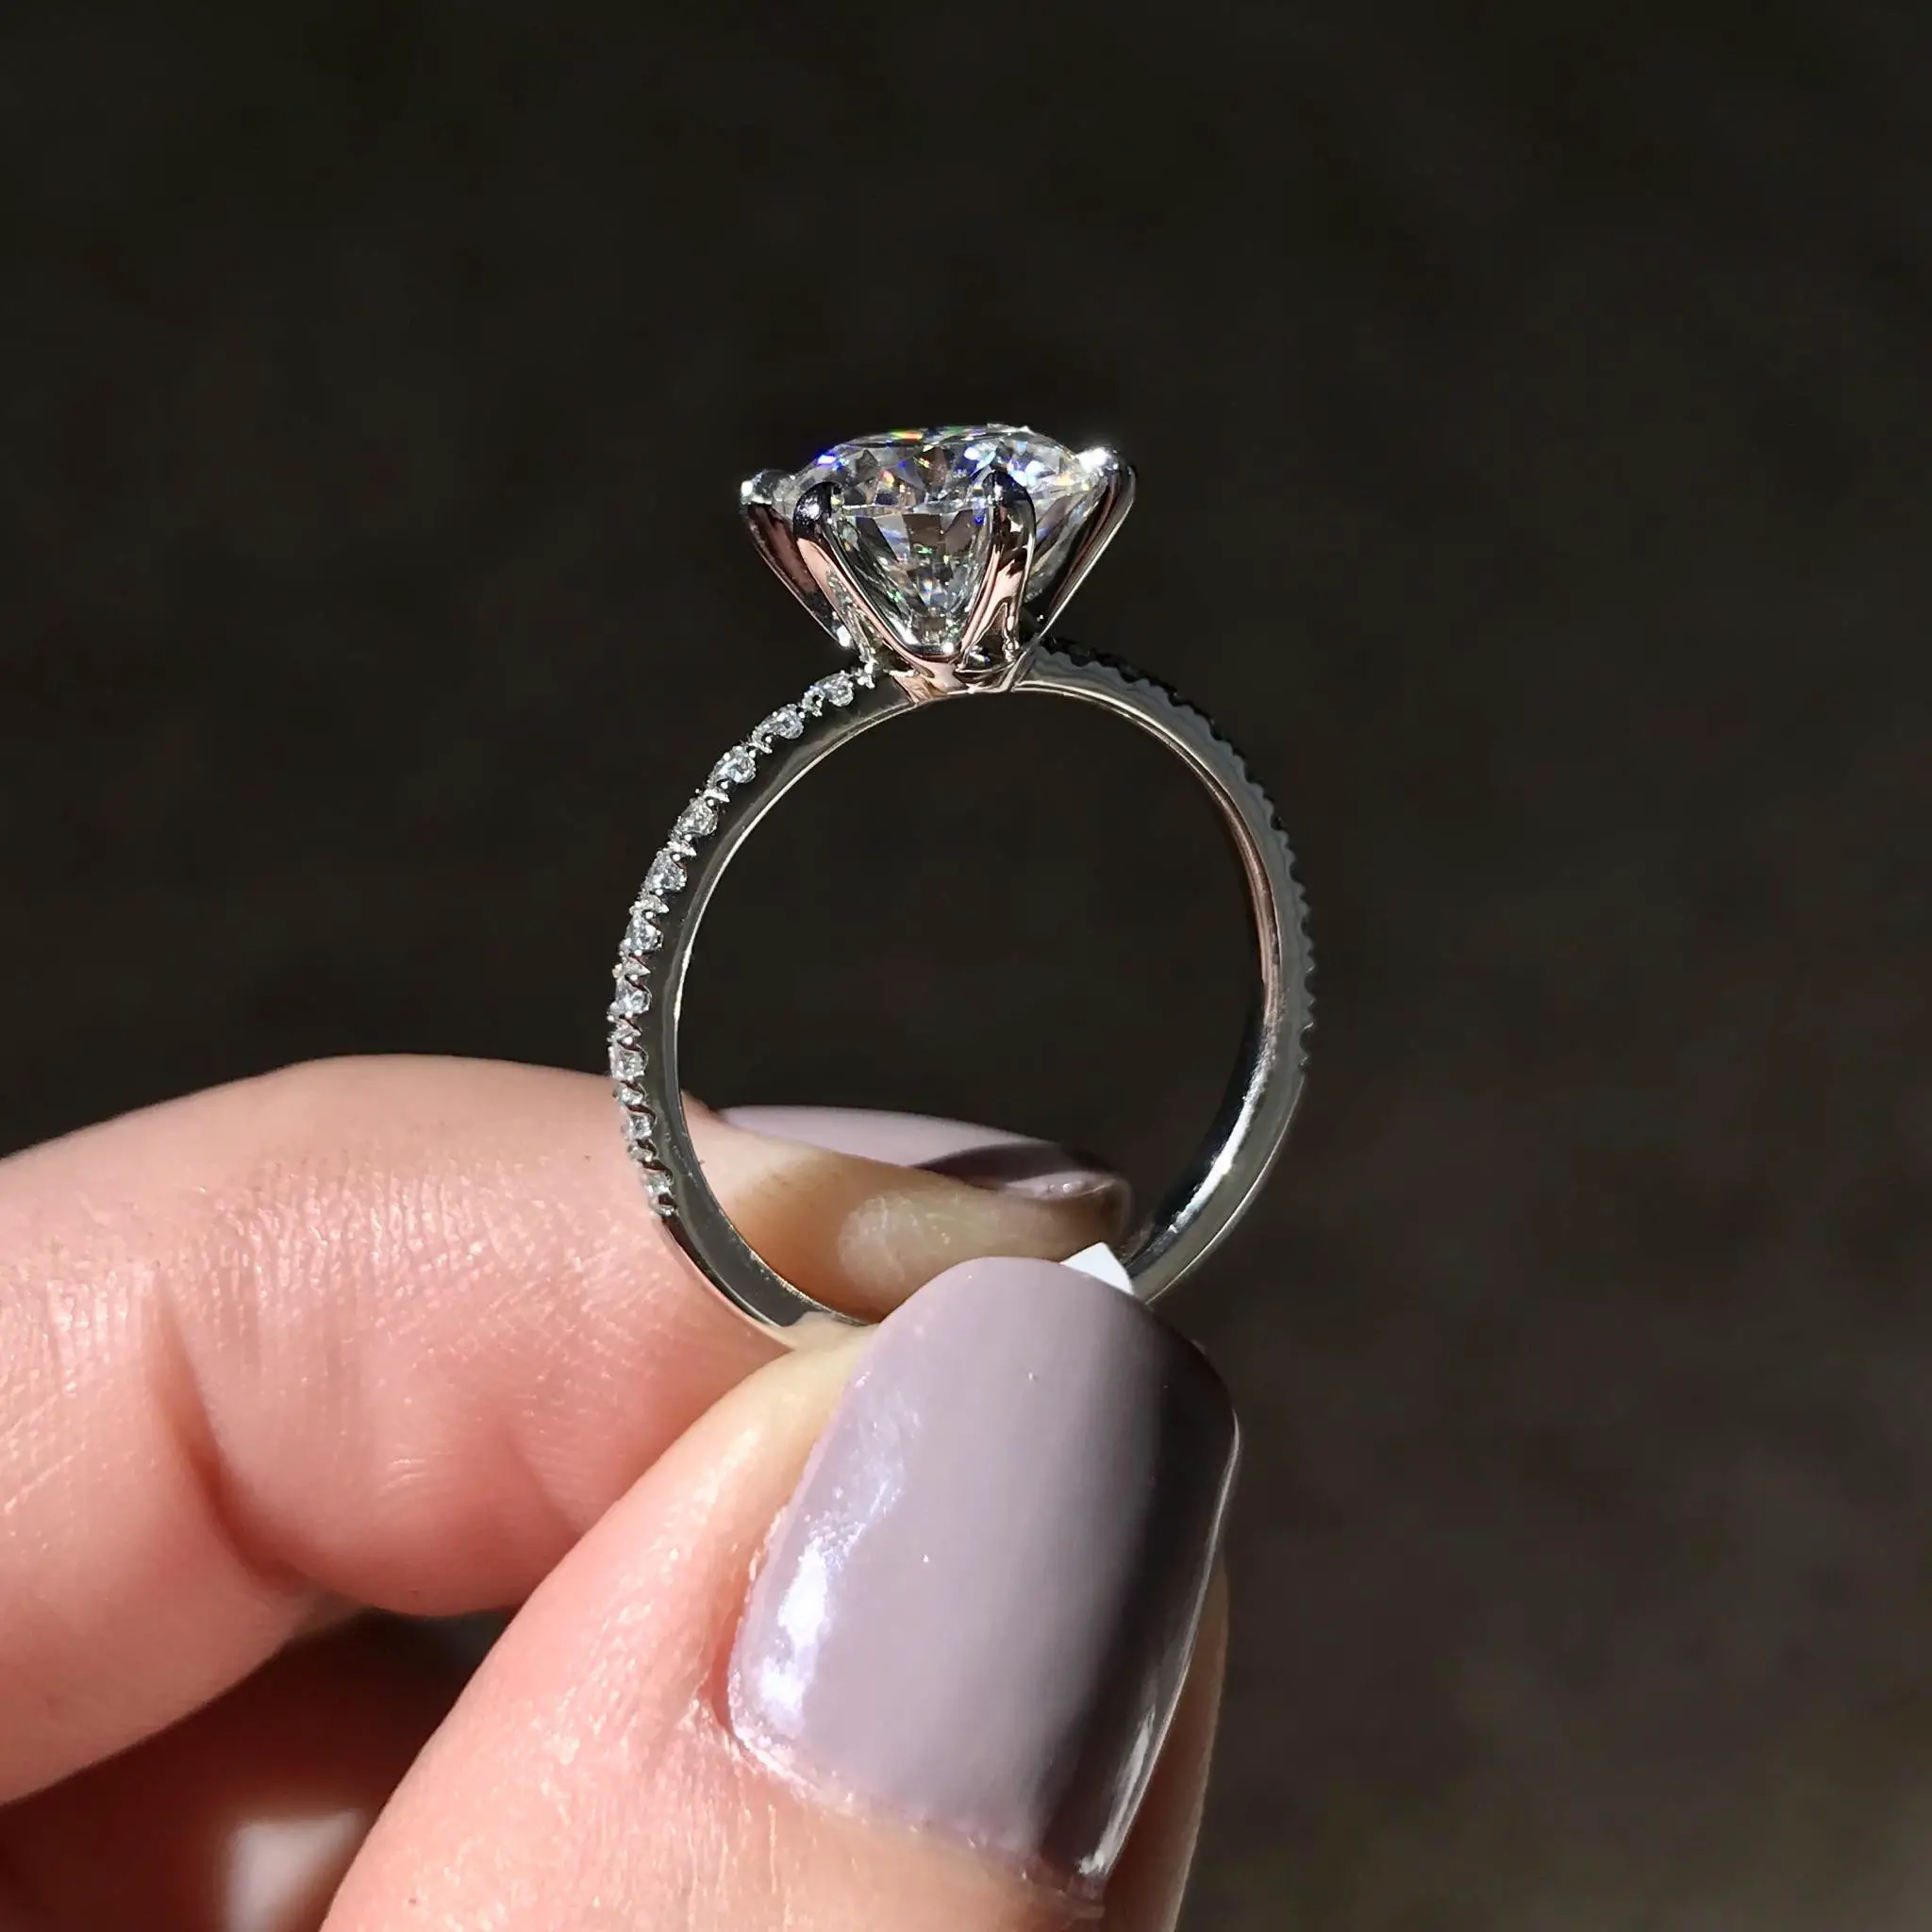 10 year anniversary engagement ring upgrade! 2.5ct center, diamond pave ...